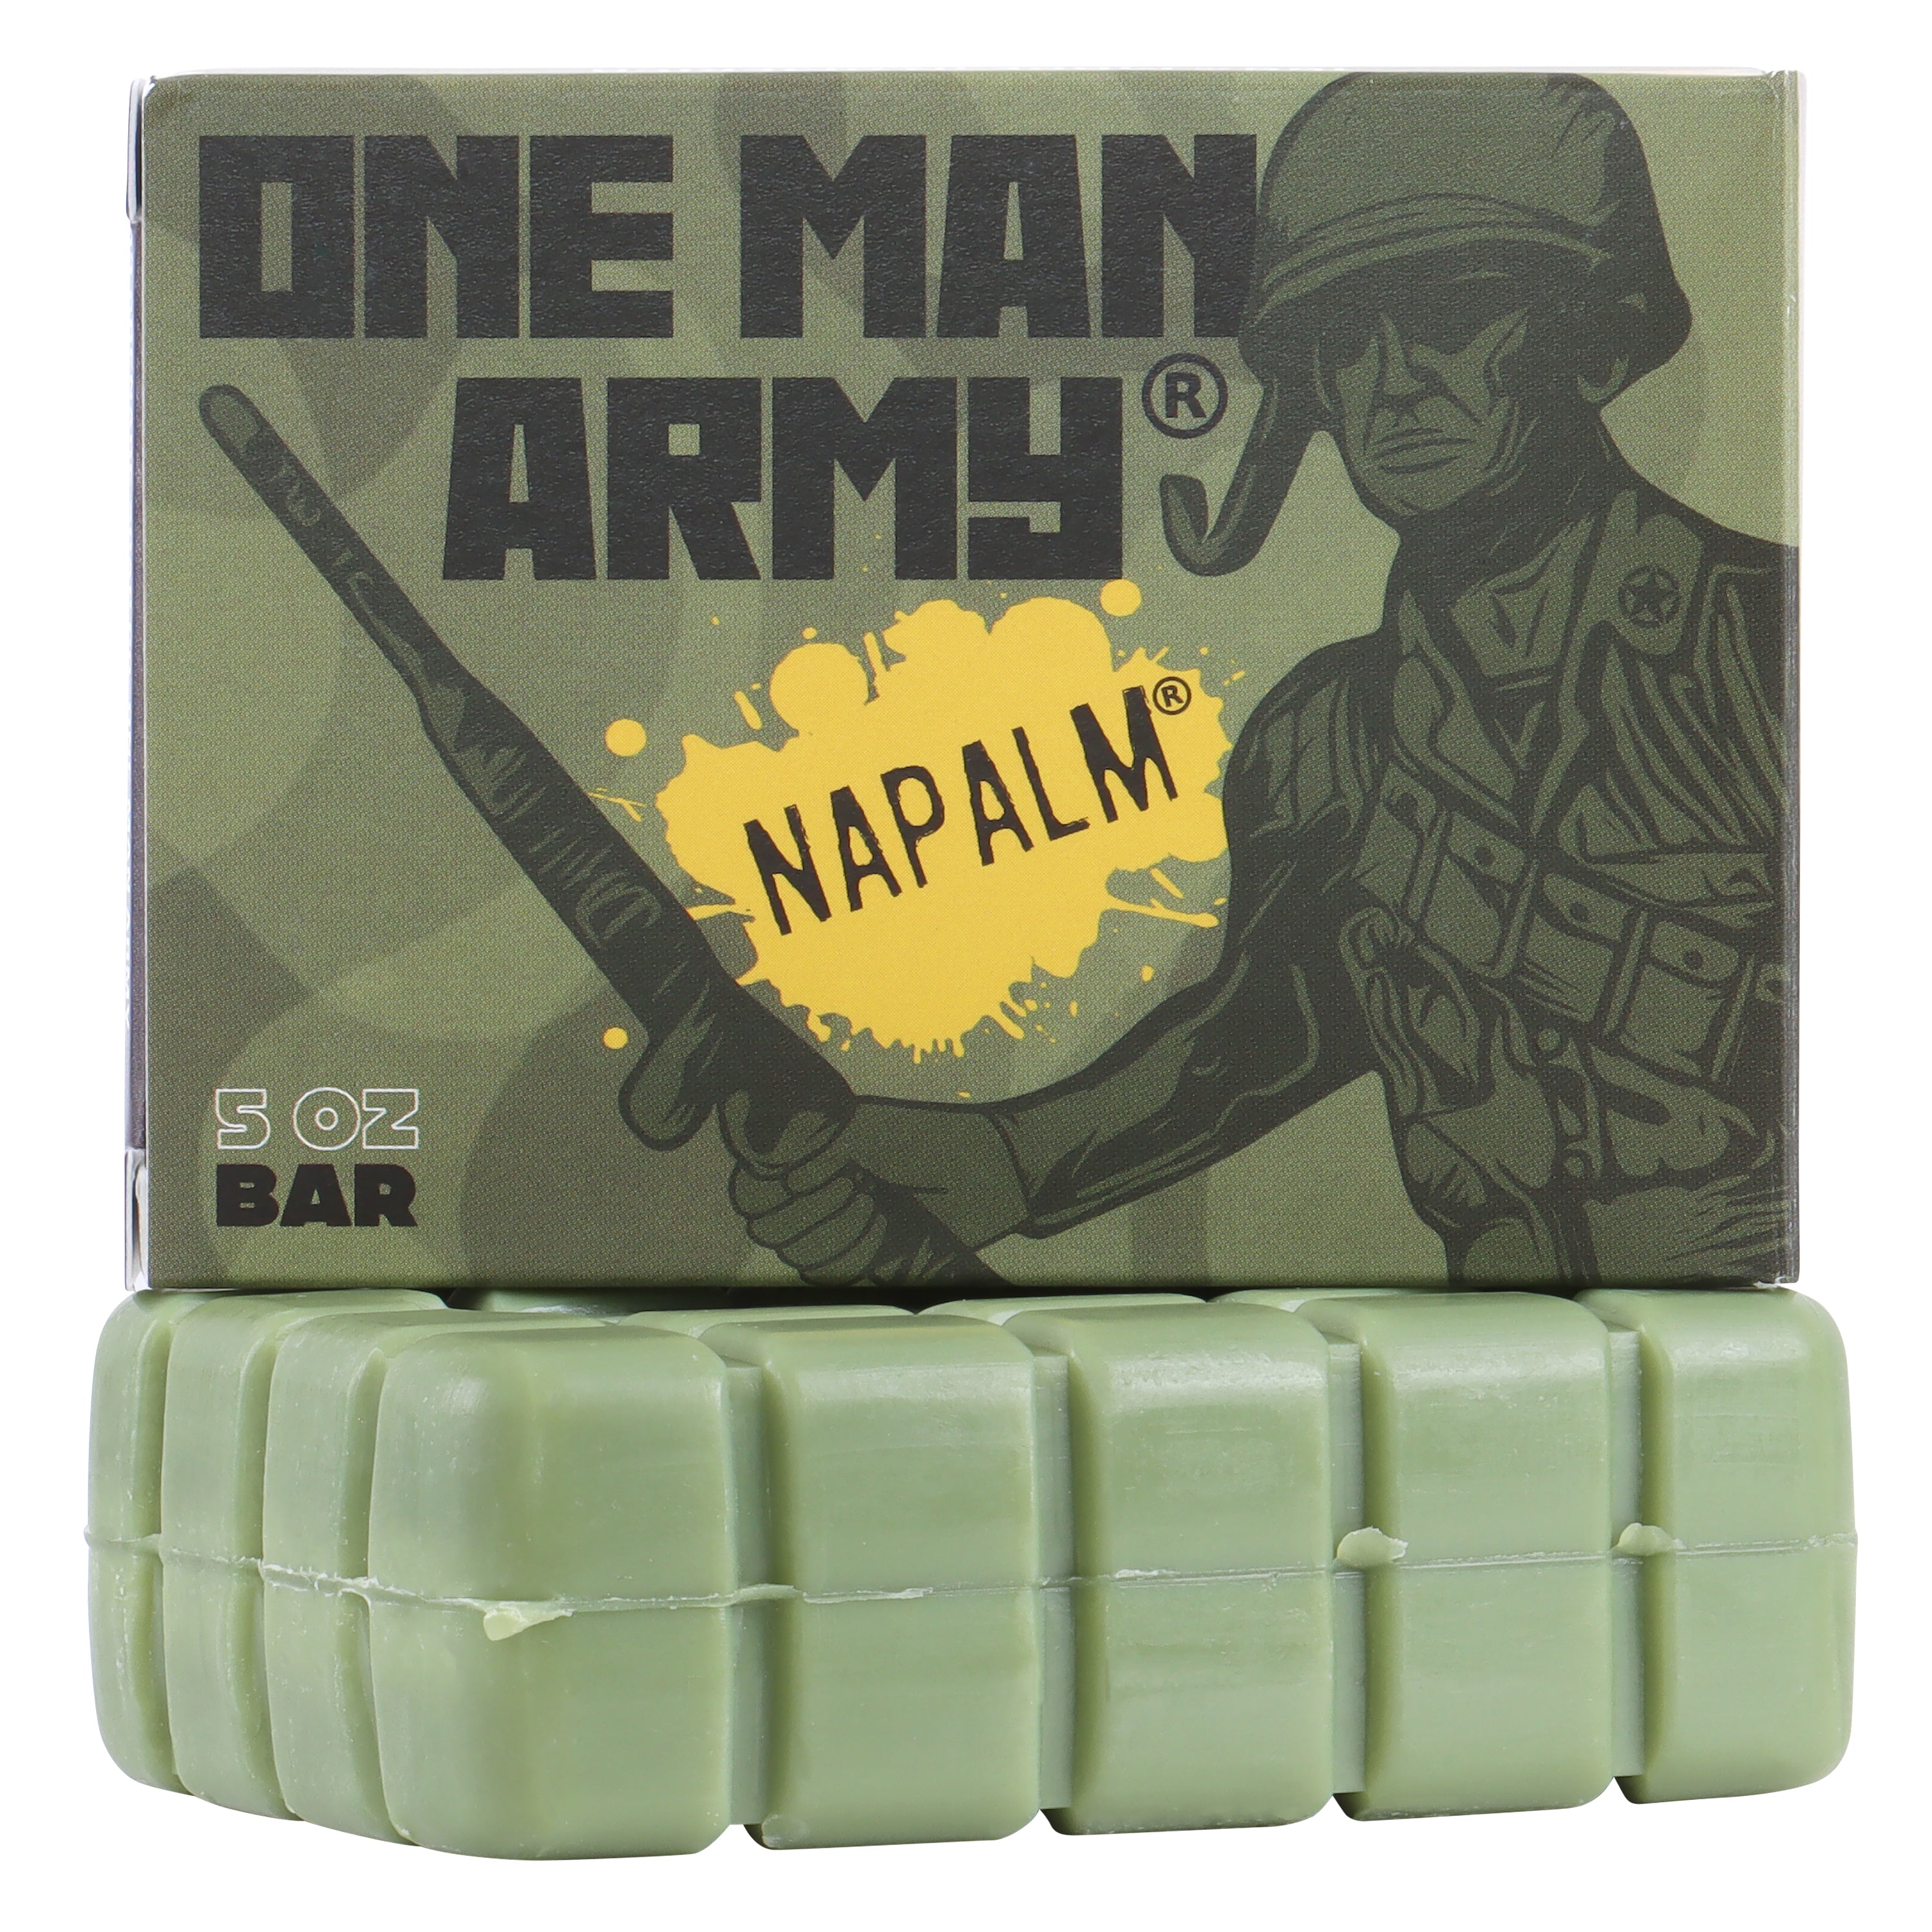 ONE MAN ARMY: NAPALM HAIR & BODY KIT